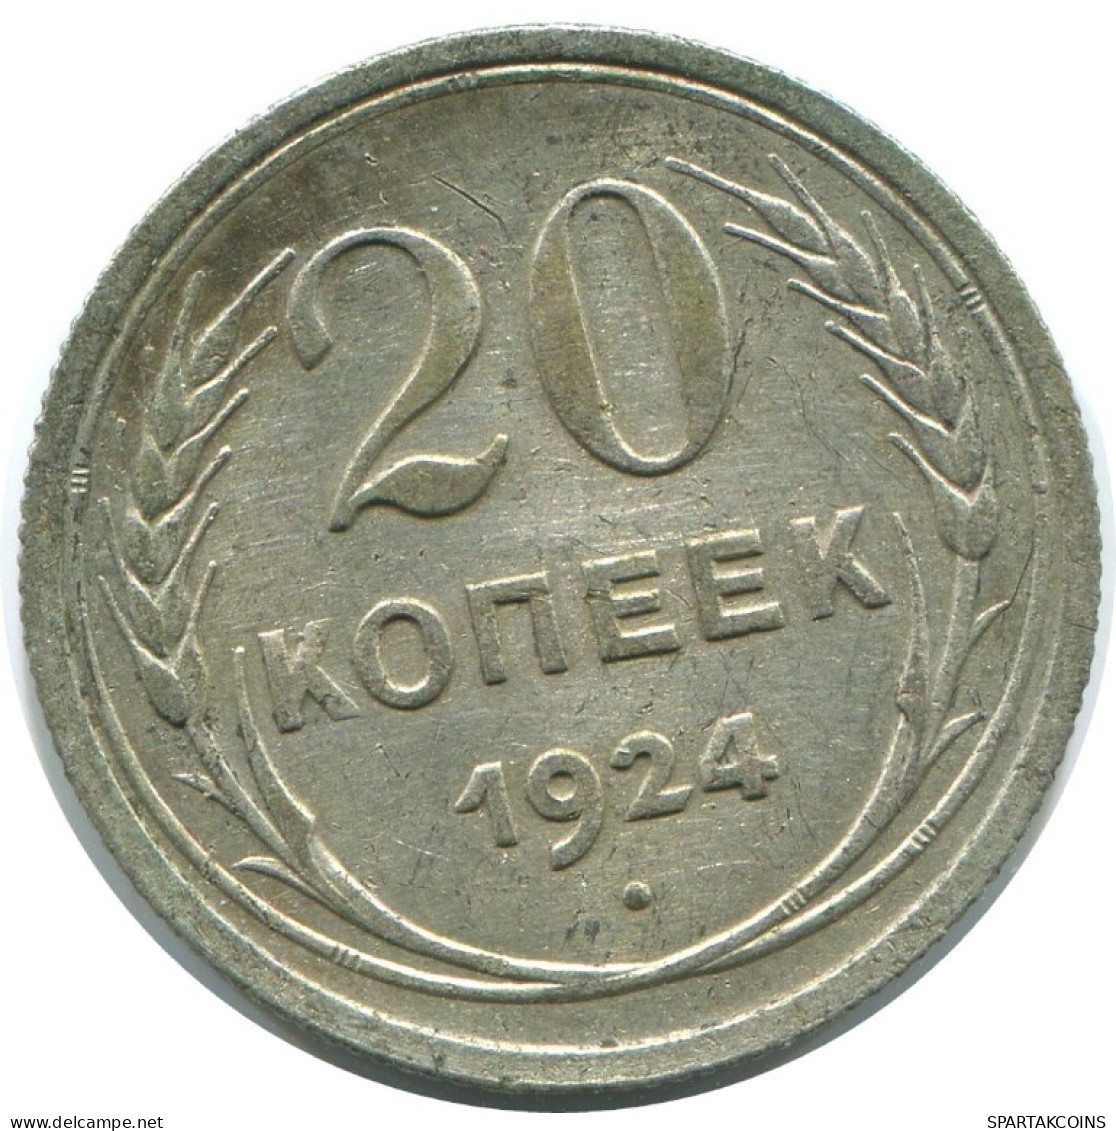 20 KOPEKS 1924 RUSSIA USSR SILVER Coin HIGH GRADE #AF307.4.U.A - Russia